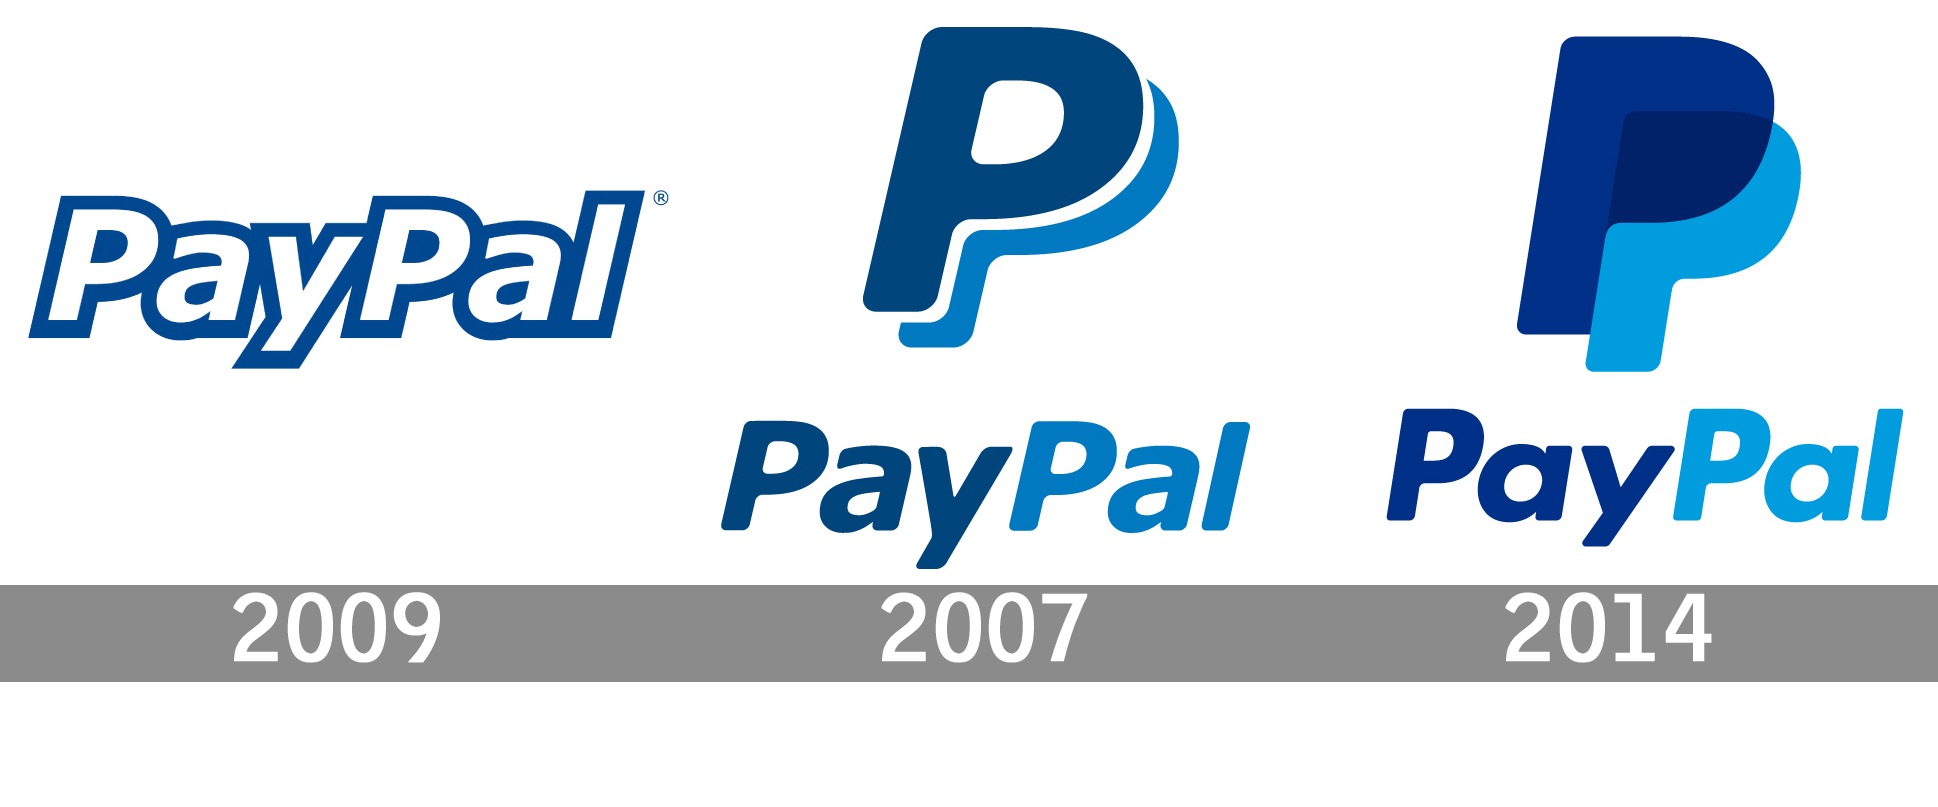 Paypazl